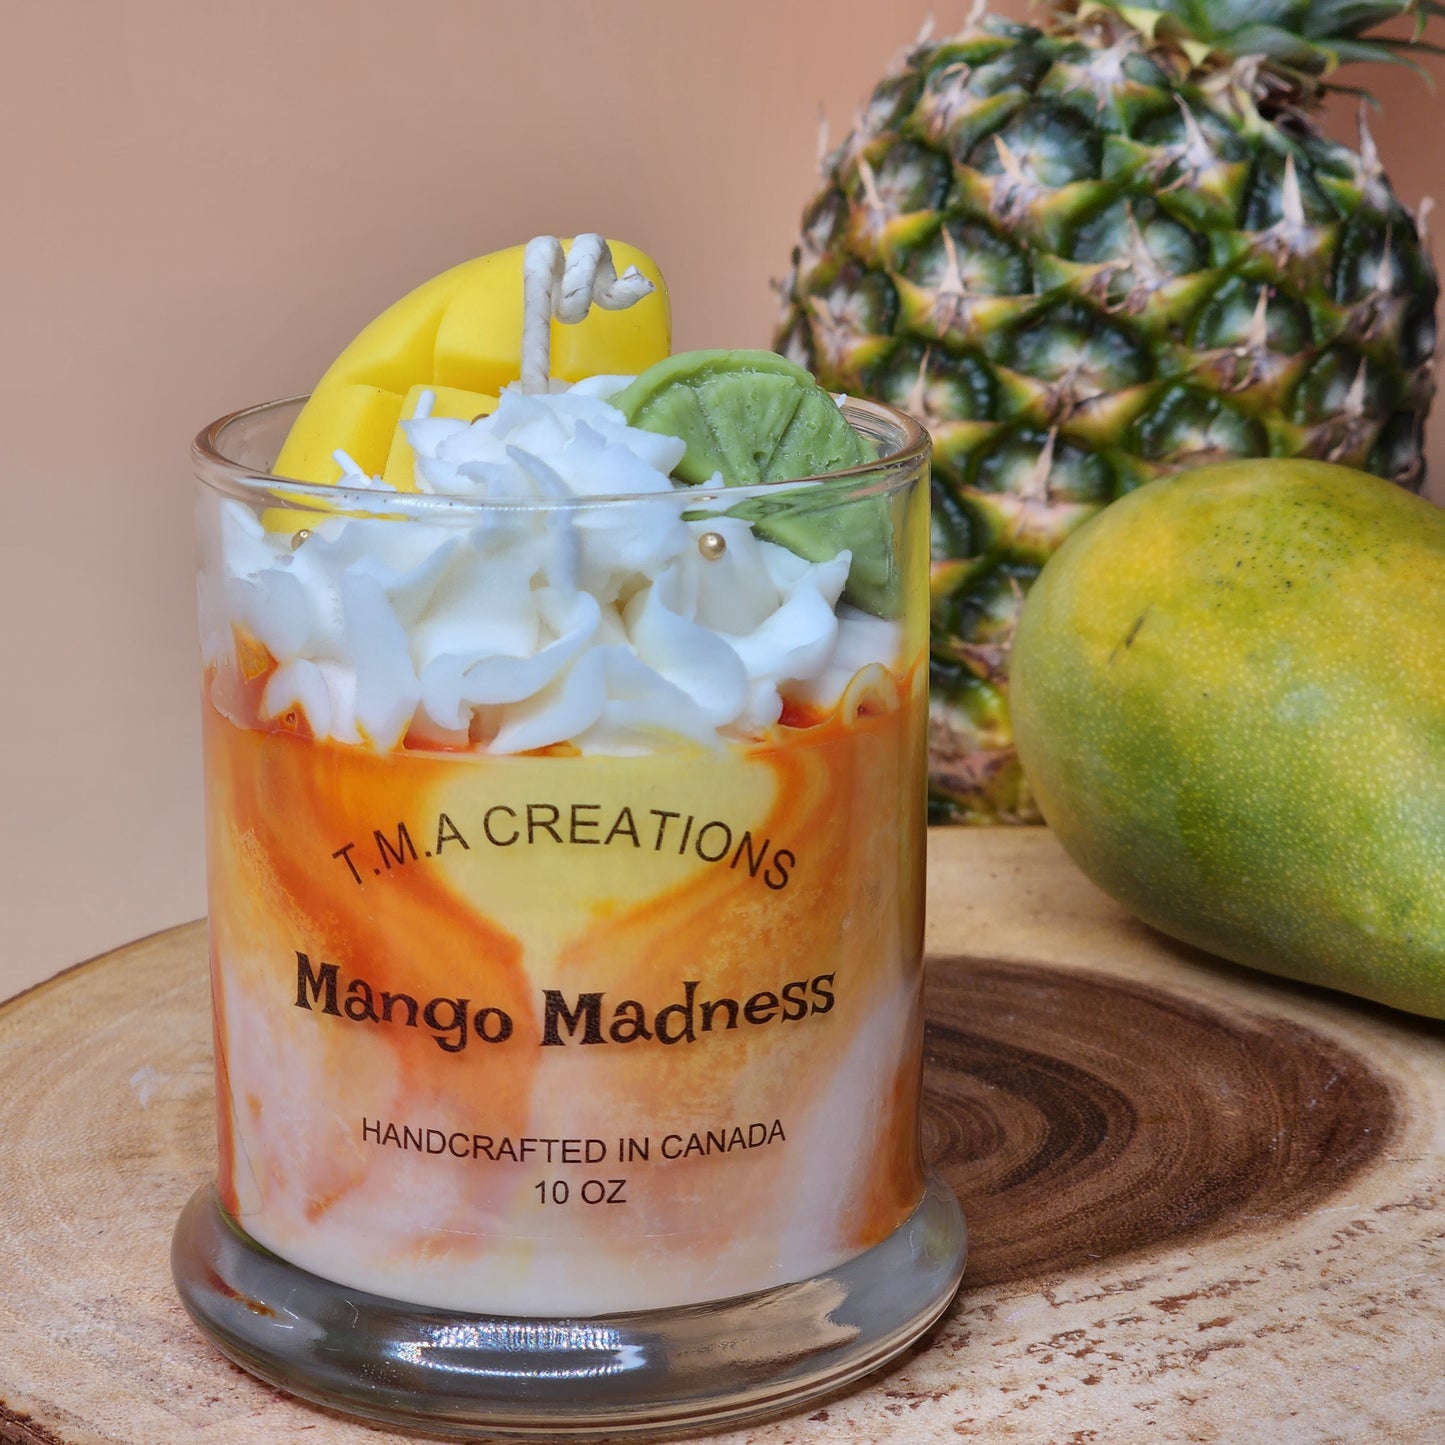 "Mango Madness" Dessert Candle